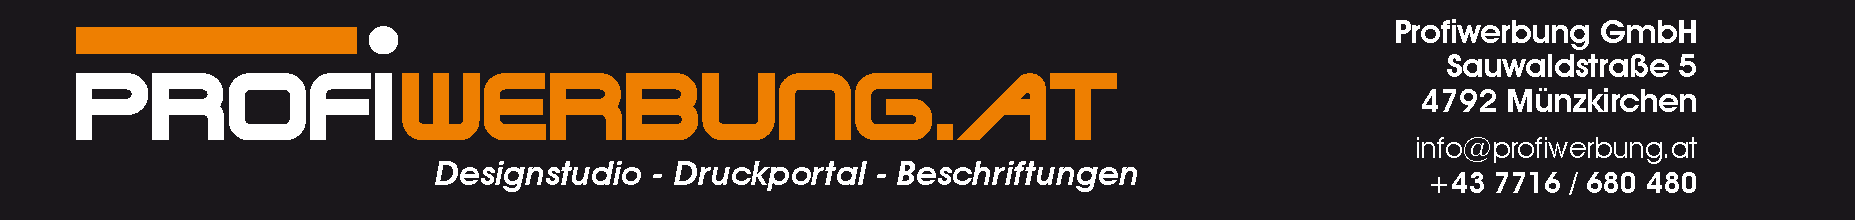 Profiwerbung GmbH